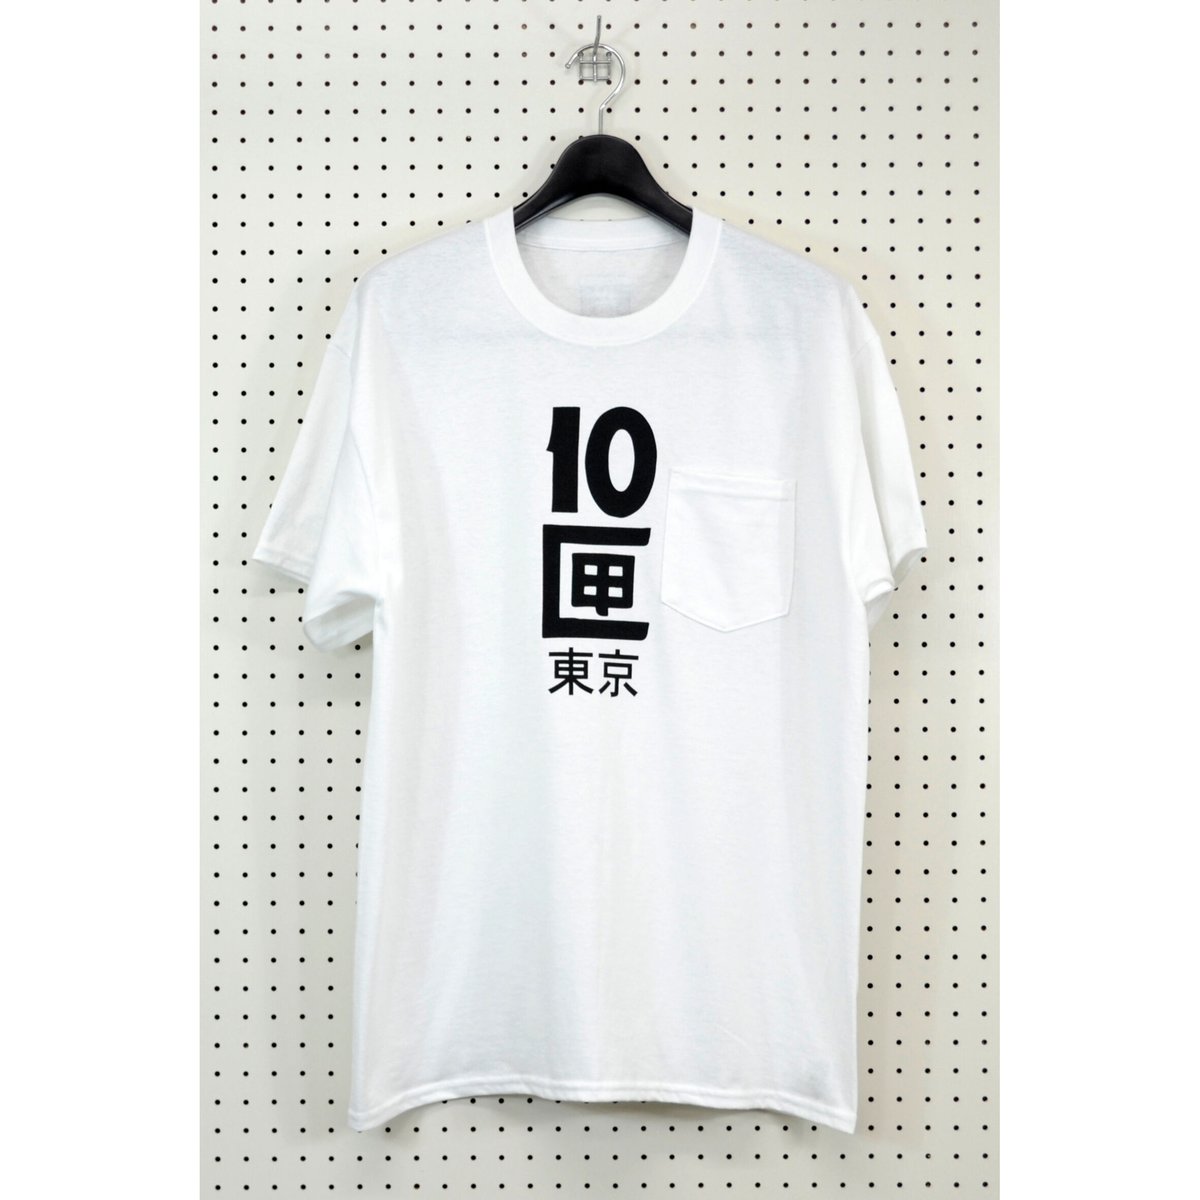 10匣 TENBOX / TENBOX TOKYO TEE | stopover tokyo